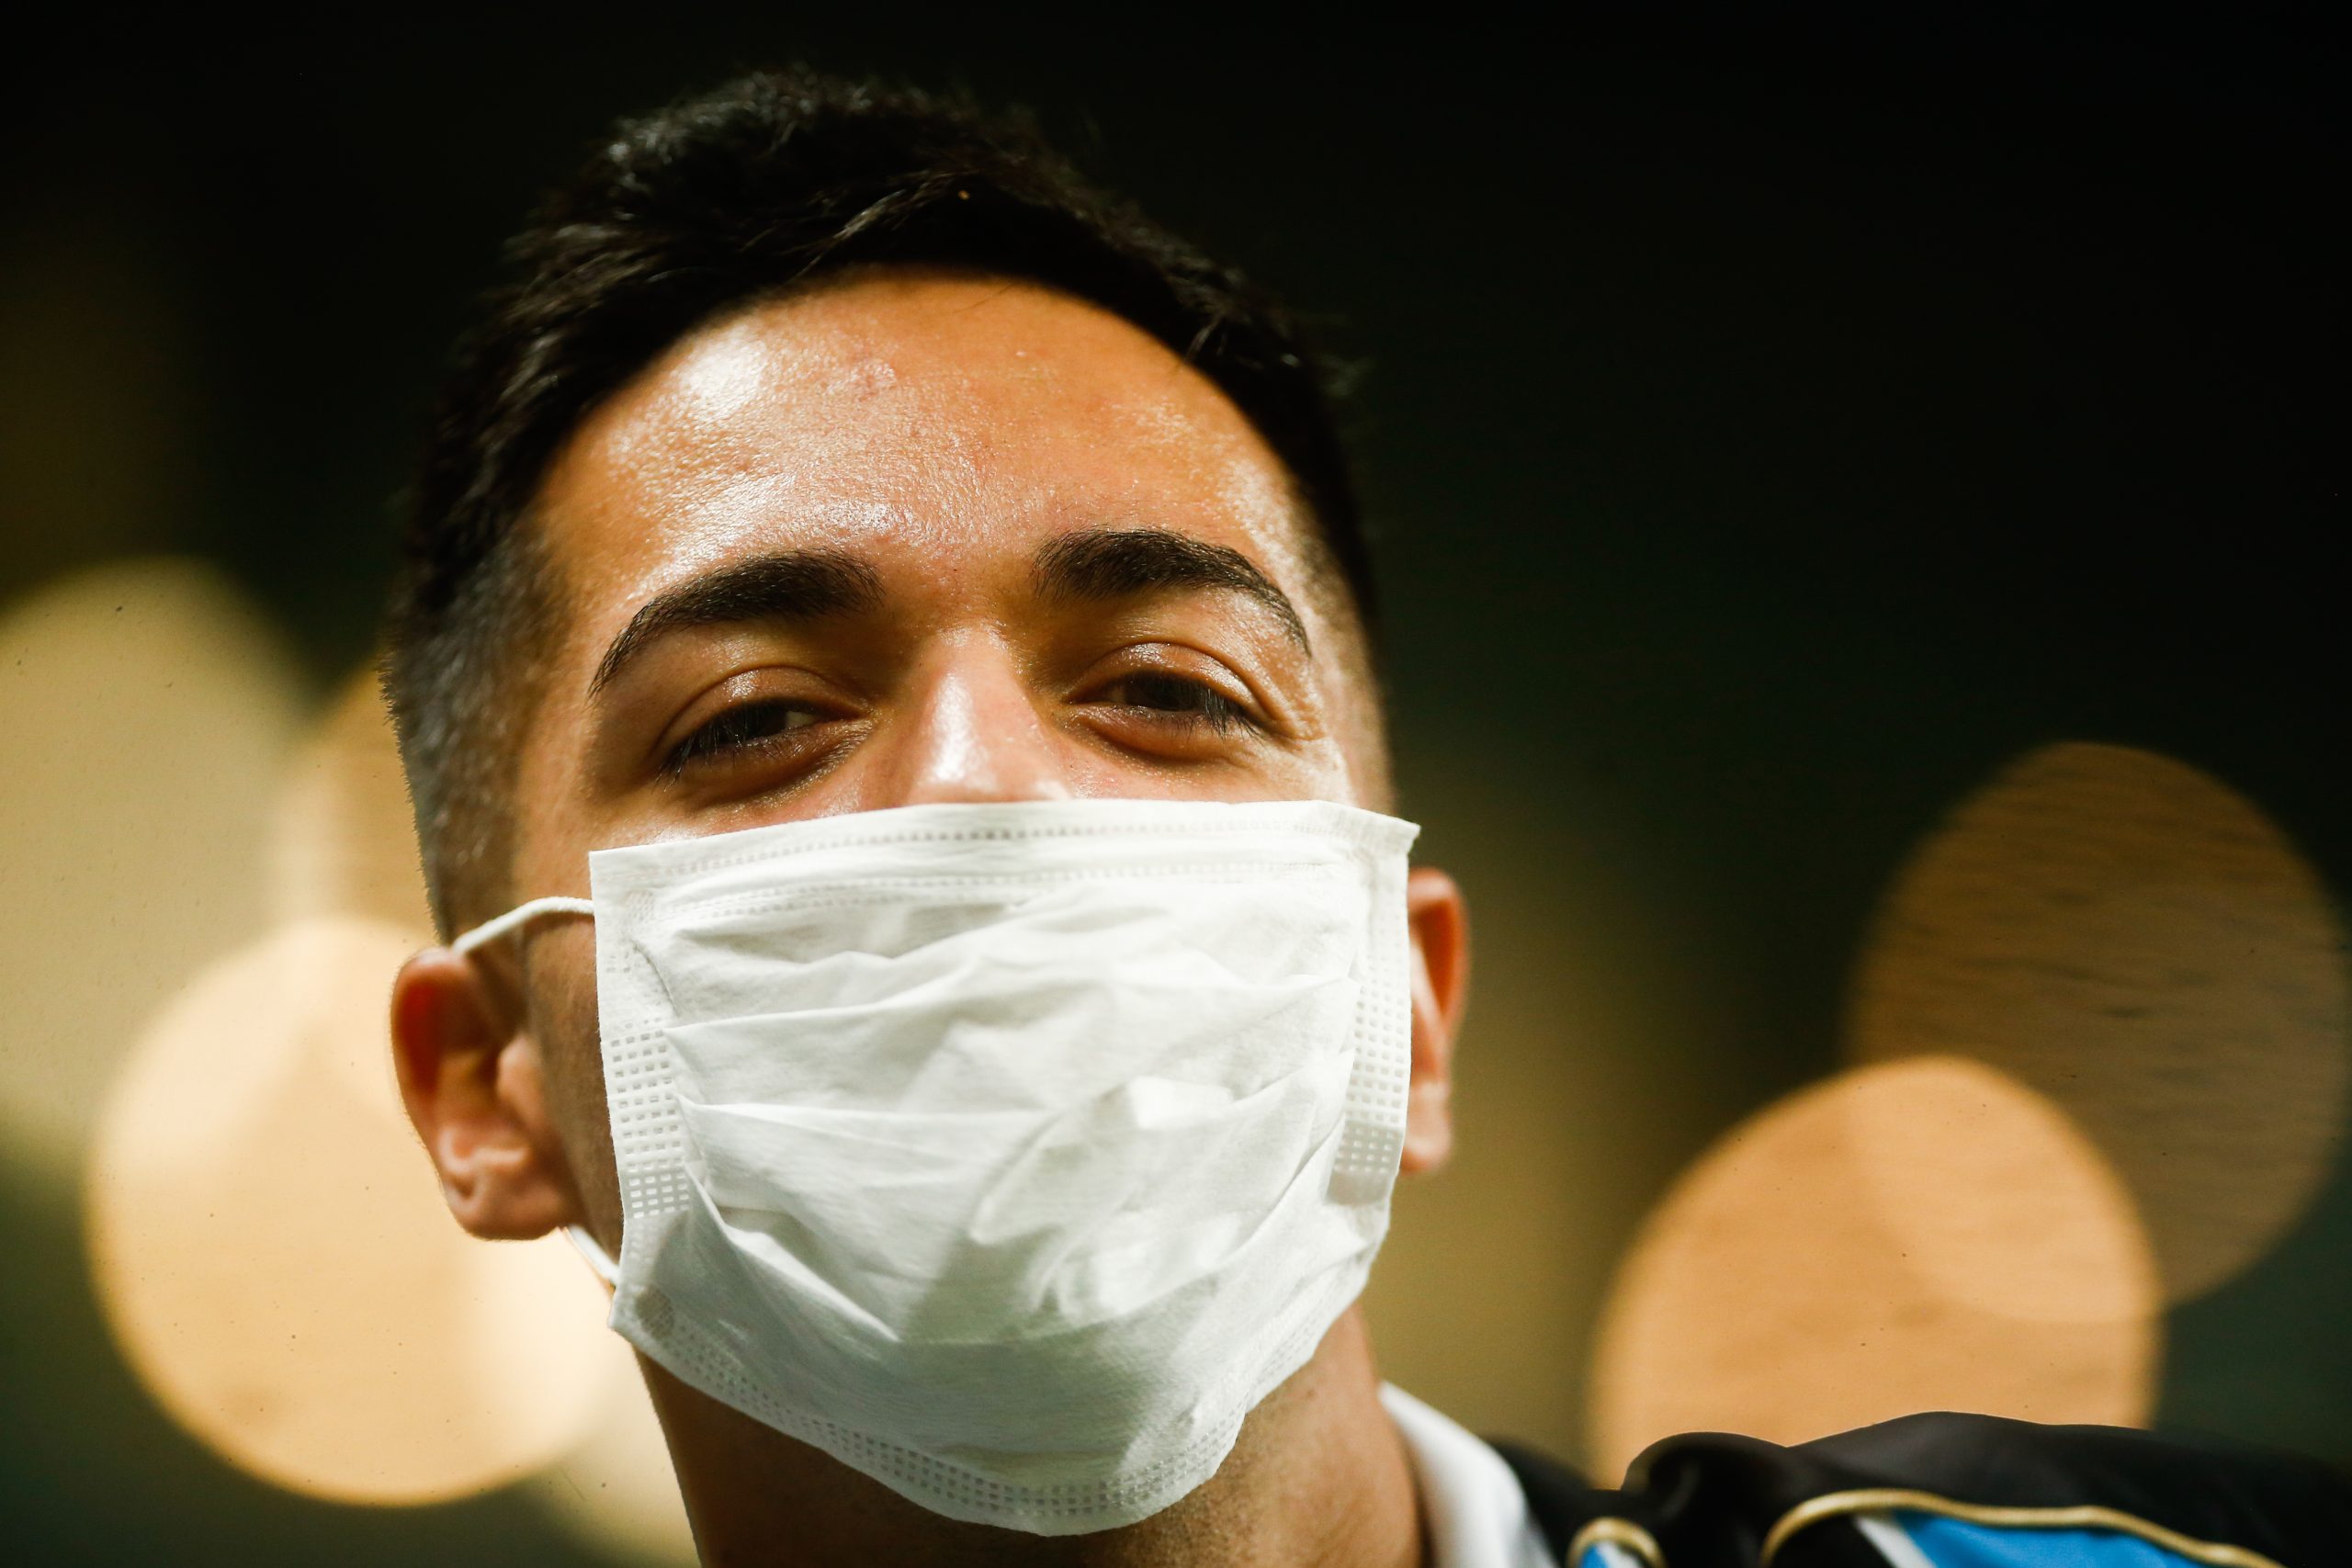 A fan wears a protective mask to take precautions against the spread of the Coronavirus (COVID-19) before the match against Internacional for the Copa CONMEBOL Libertadores 2020 at Arena do Gremio on March 12, 2020 in Porto Alegre, Brazil.